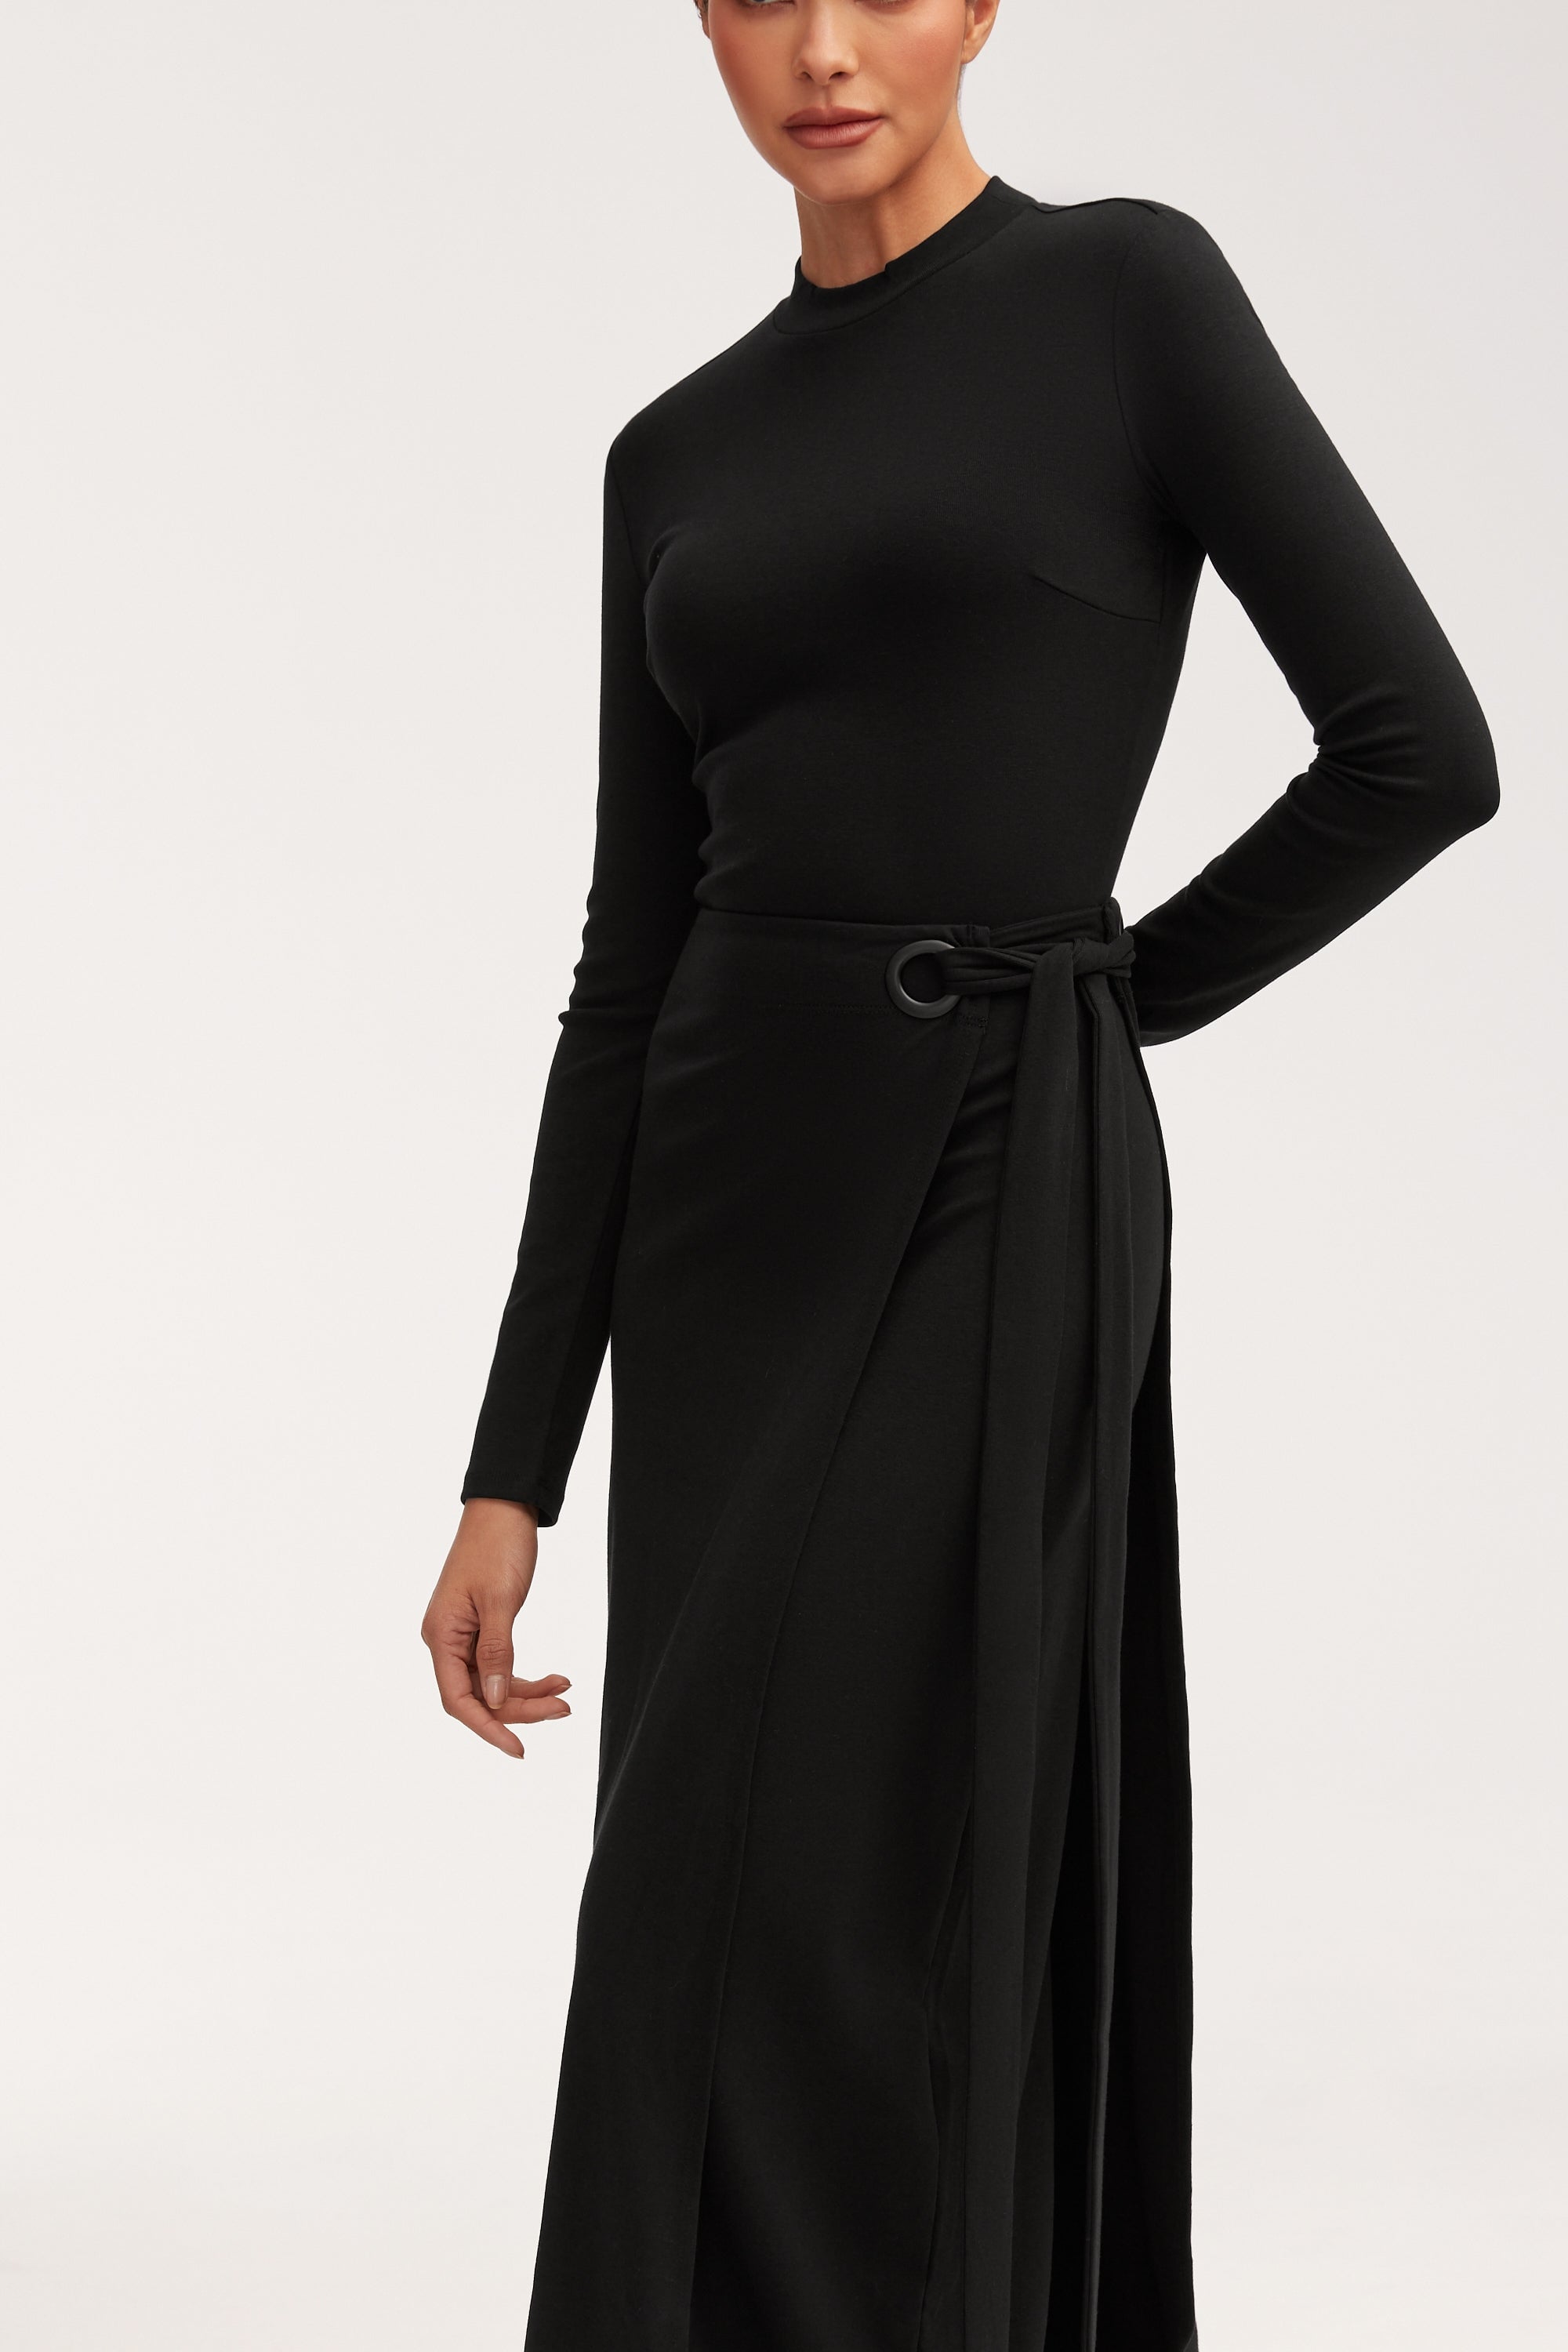 Melissa Jersey Maxi Dress with Wrap Skirt - Black Sets Veiled 